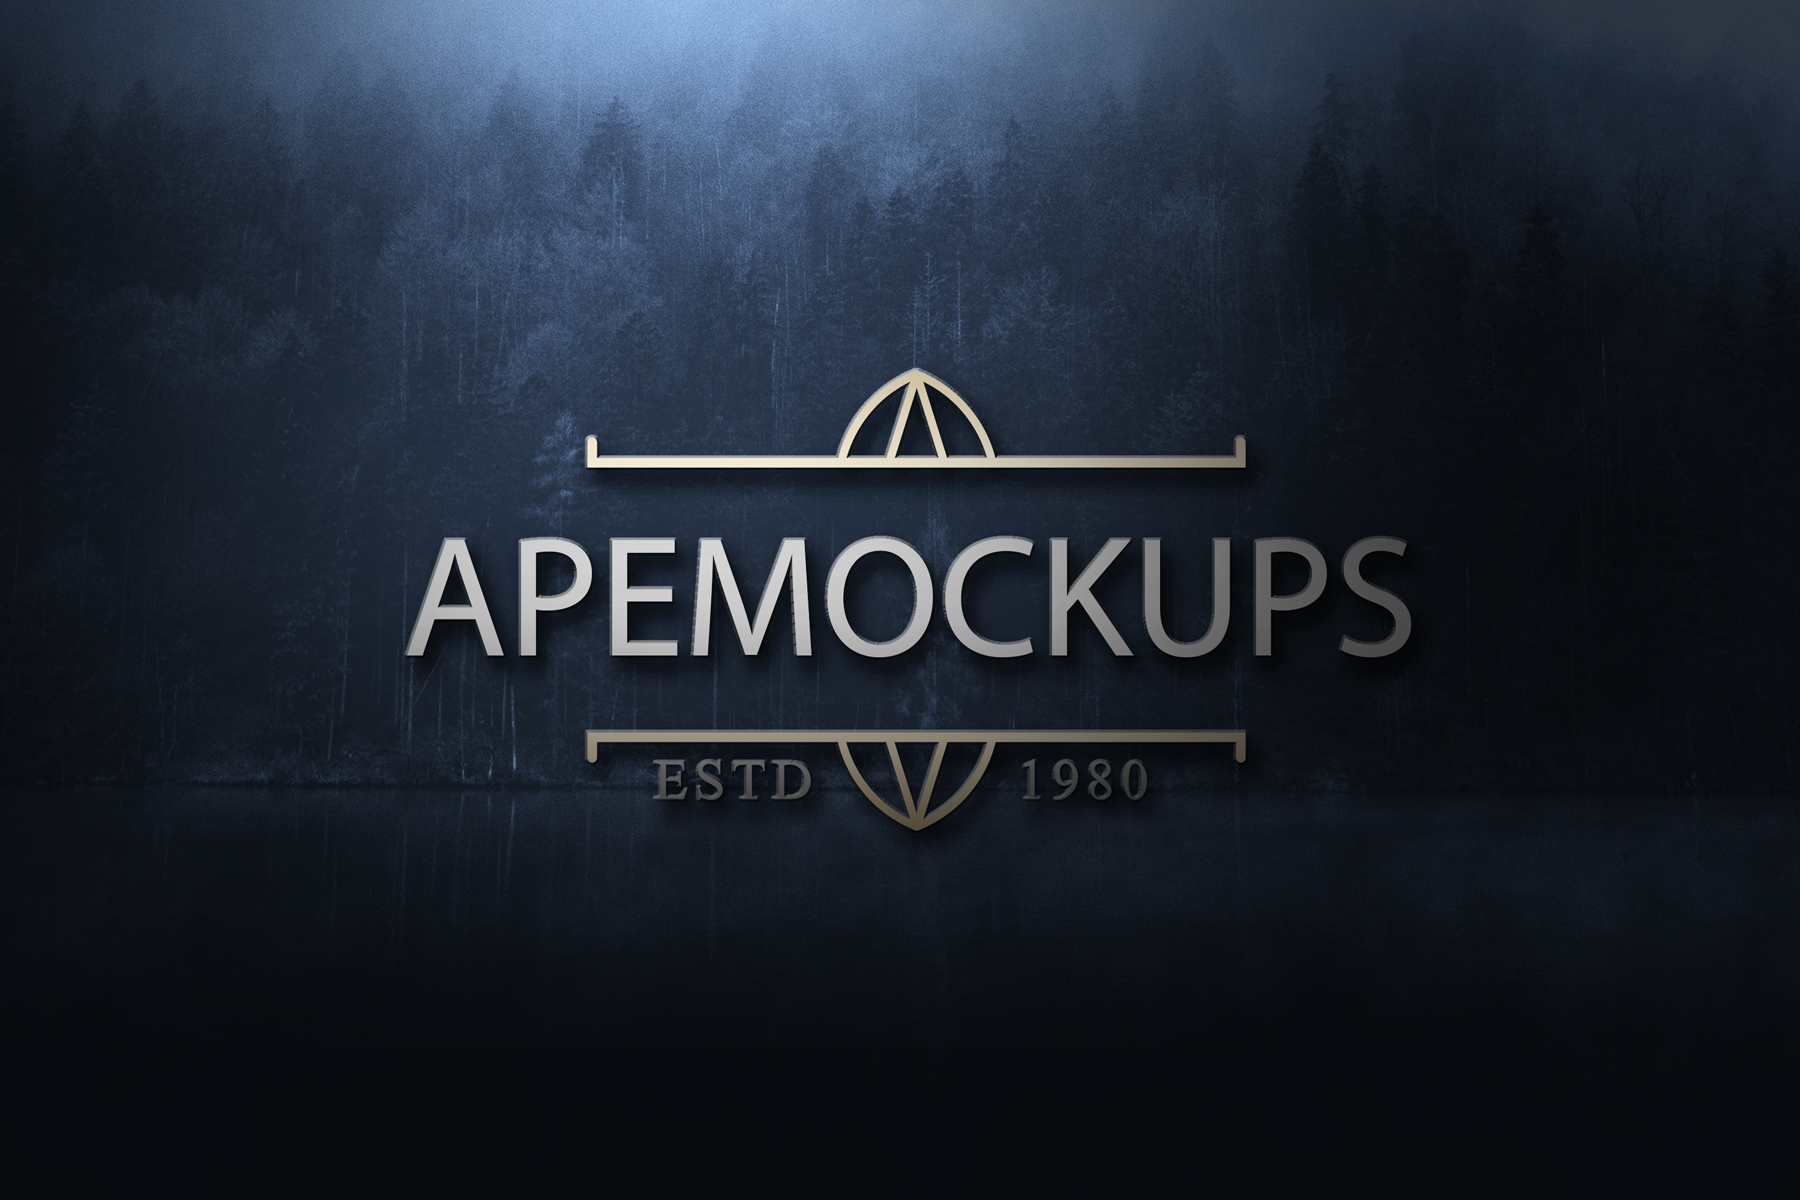 Download Dark Forest Logo Mockup Psd Free Mockups Best Free Psd Mockups Apemockups